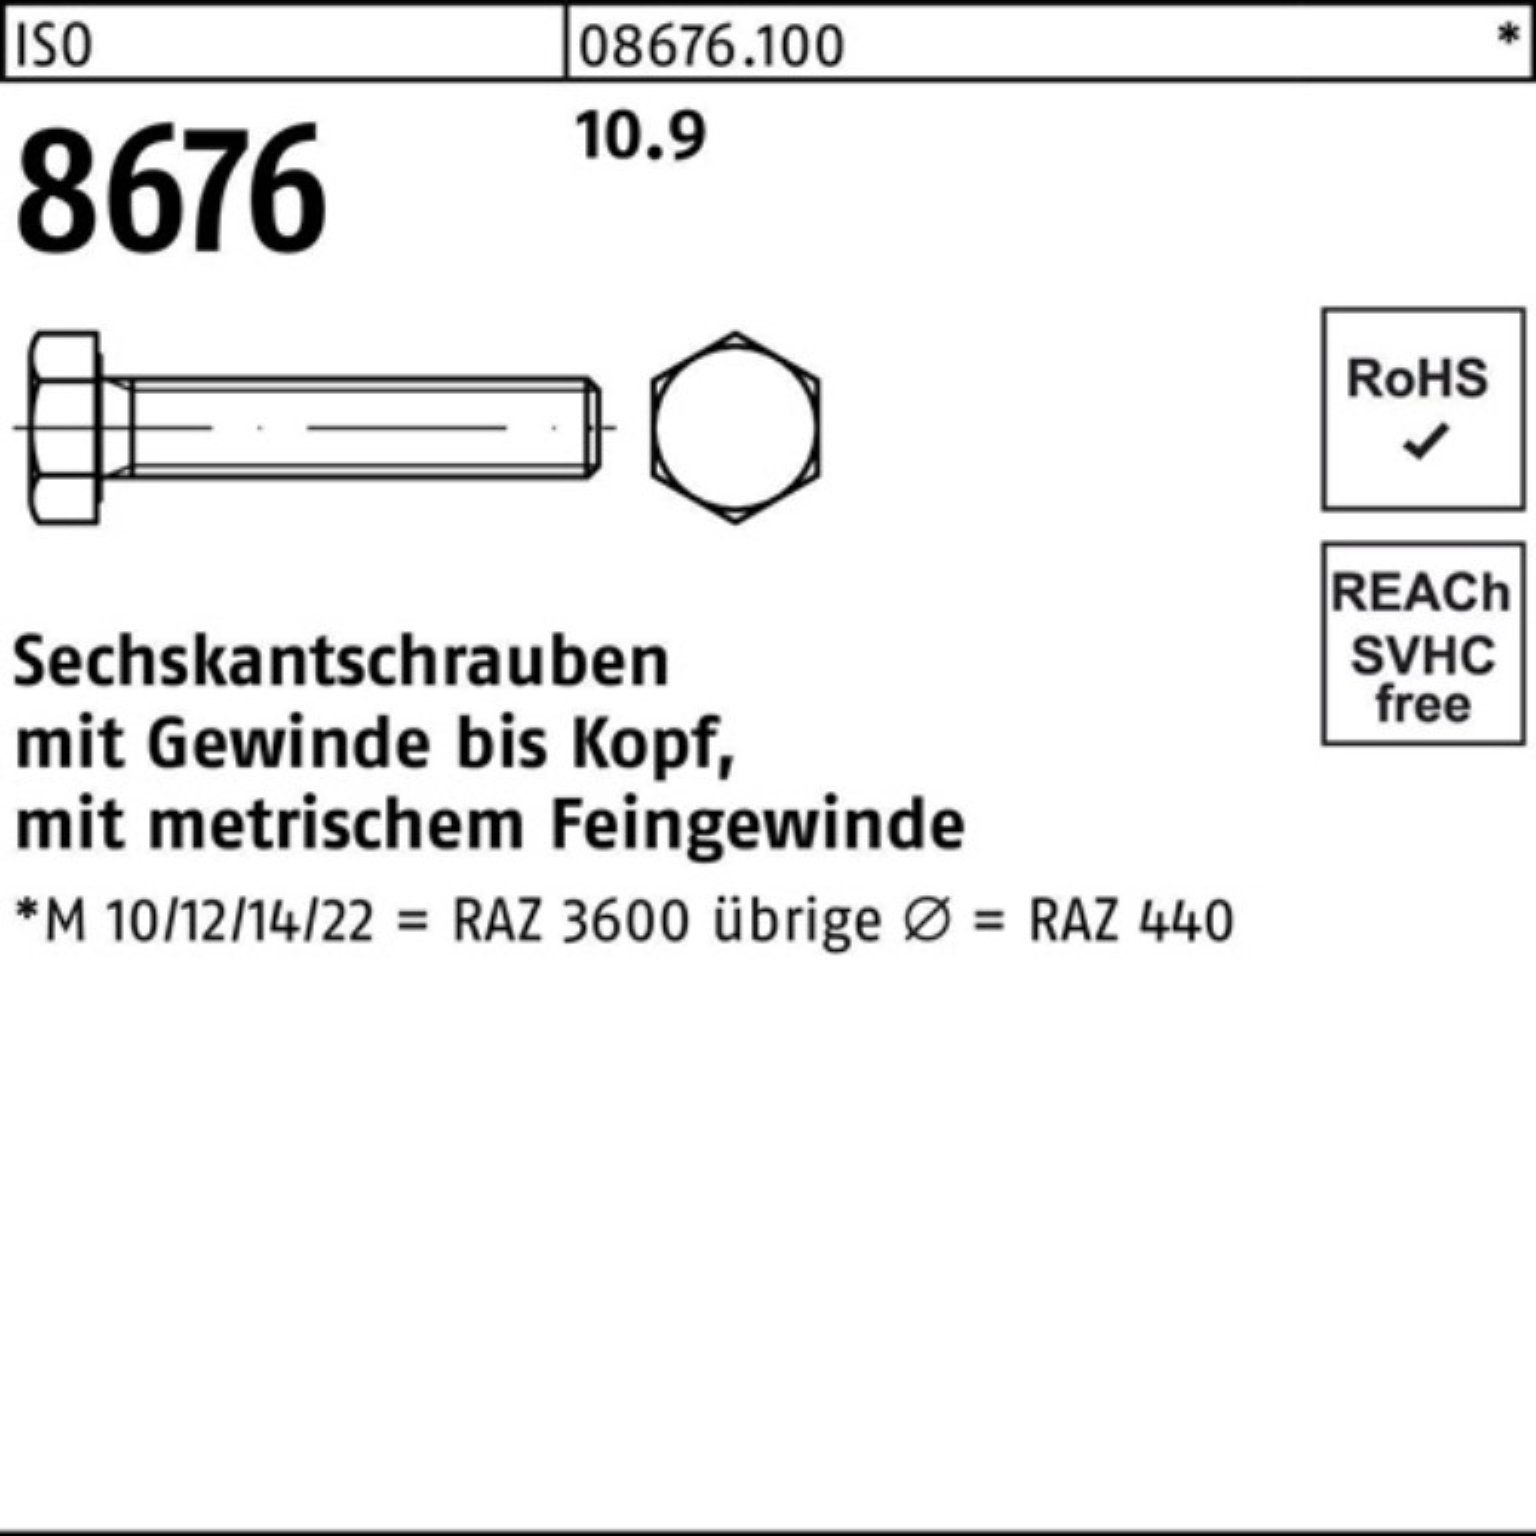 VG 8 10.9 Reyher Sechskantschraube Stück 1 Sechskantschraube 100er M30x2x150 8676 ISO ISO Pack